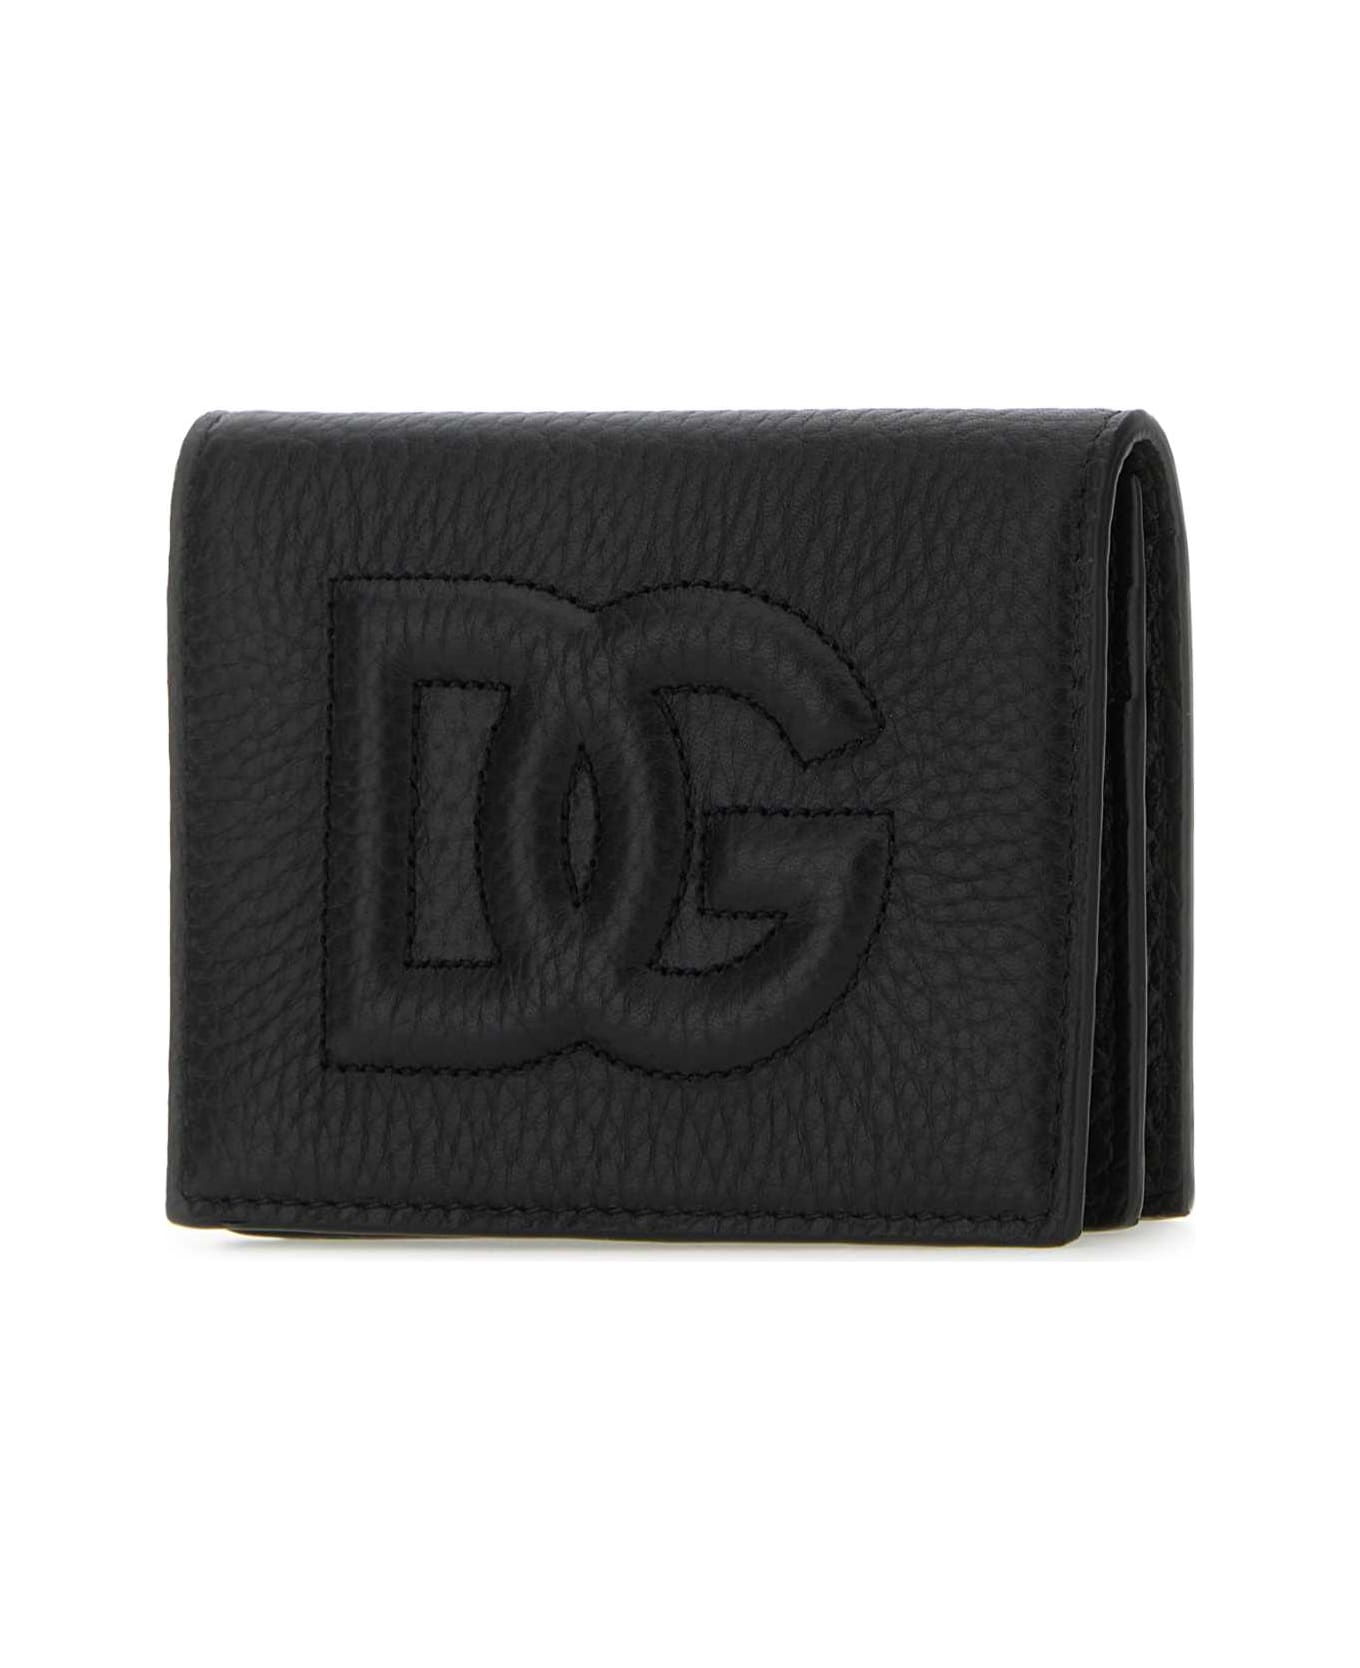 Dolce & Gabbana Black Leather Wallet - NERO 財布